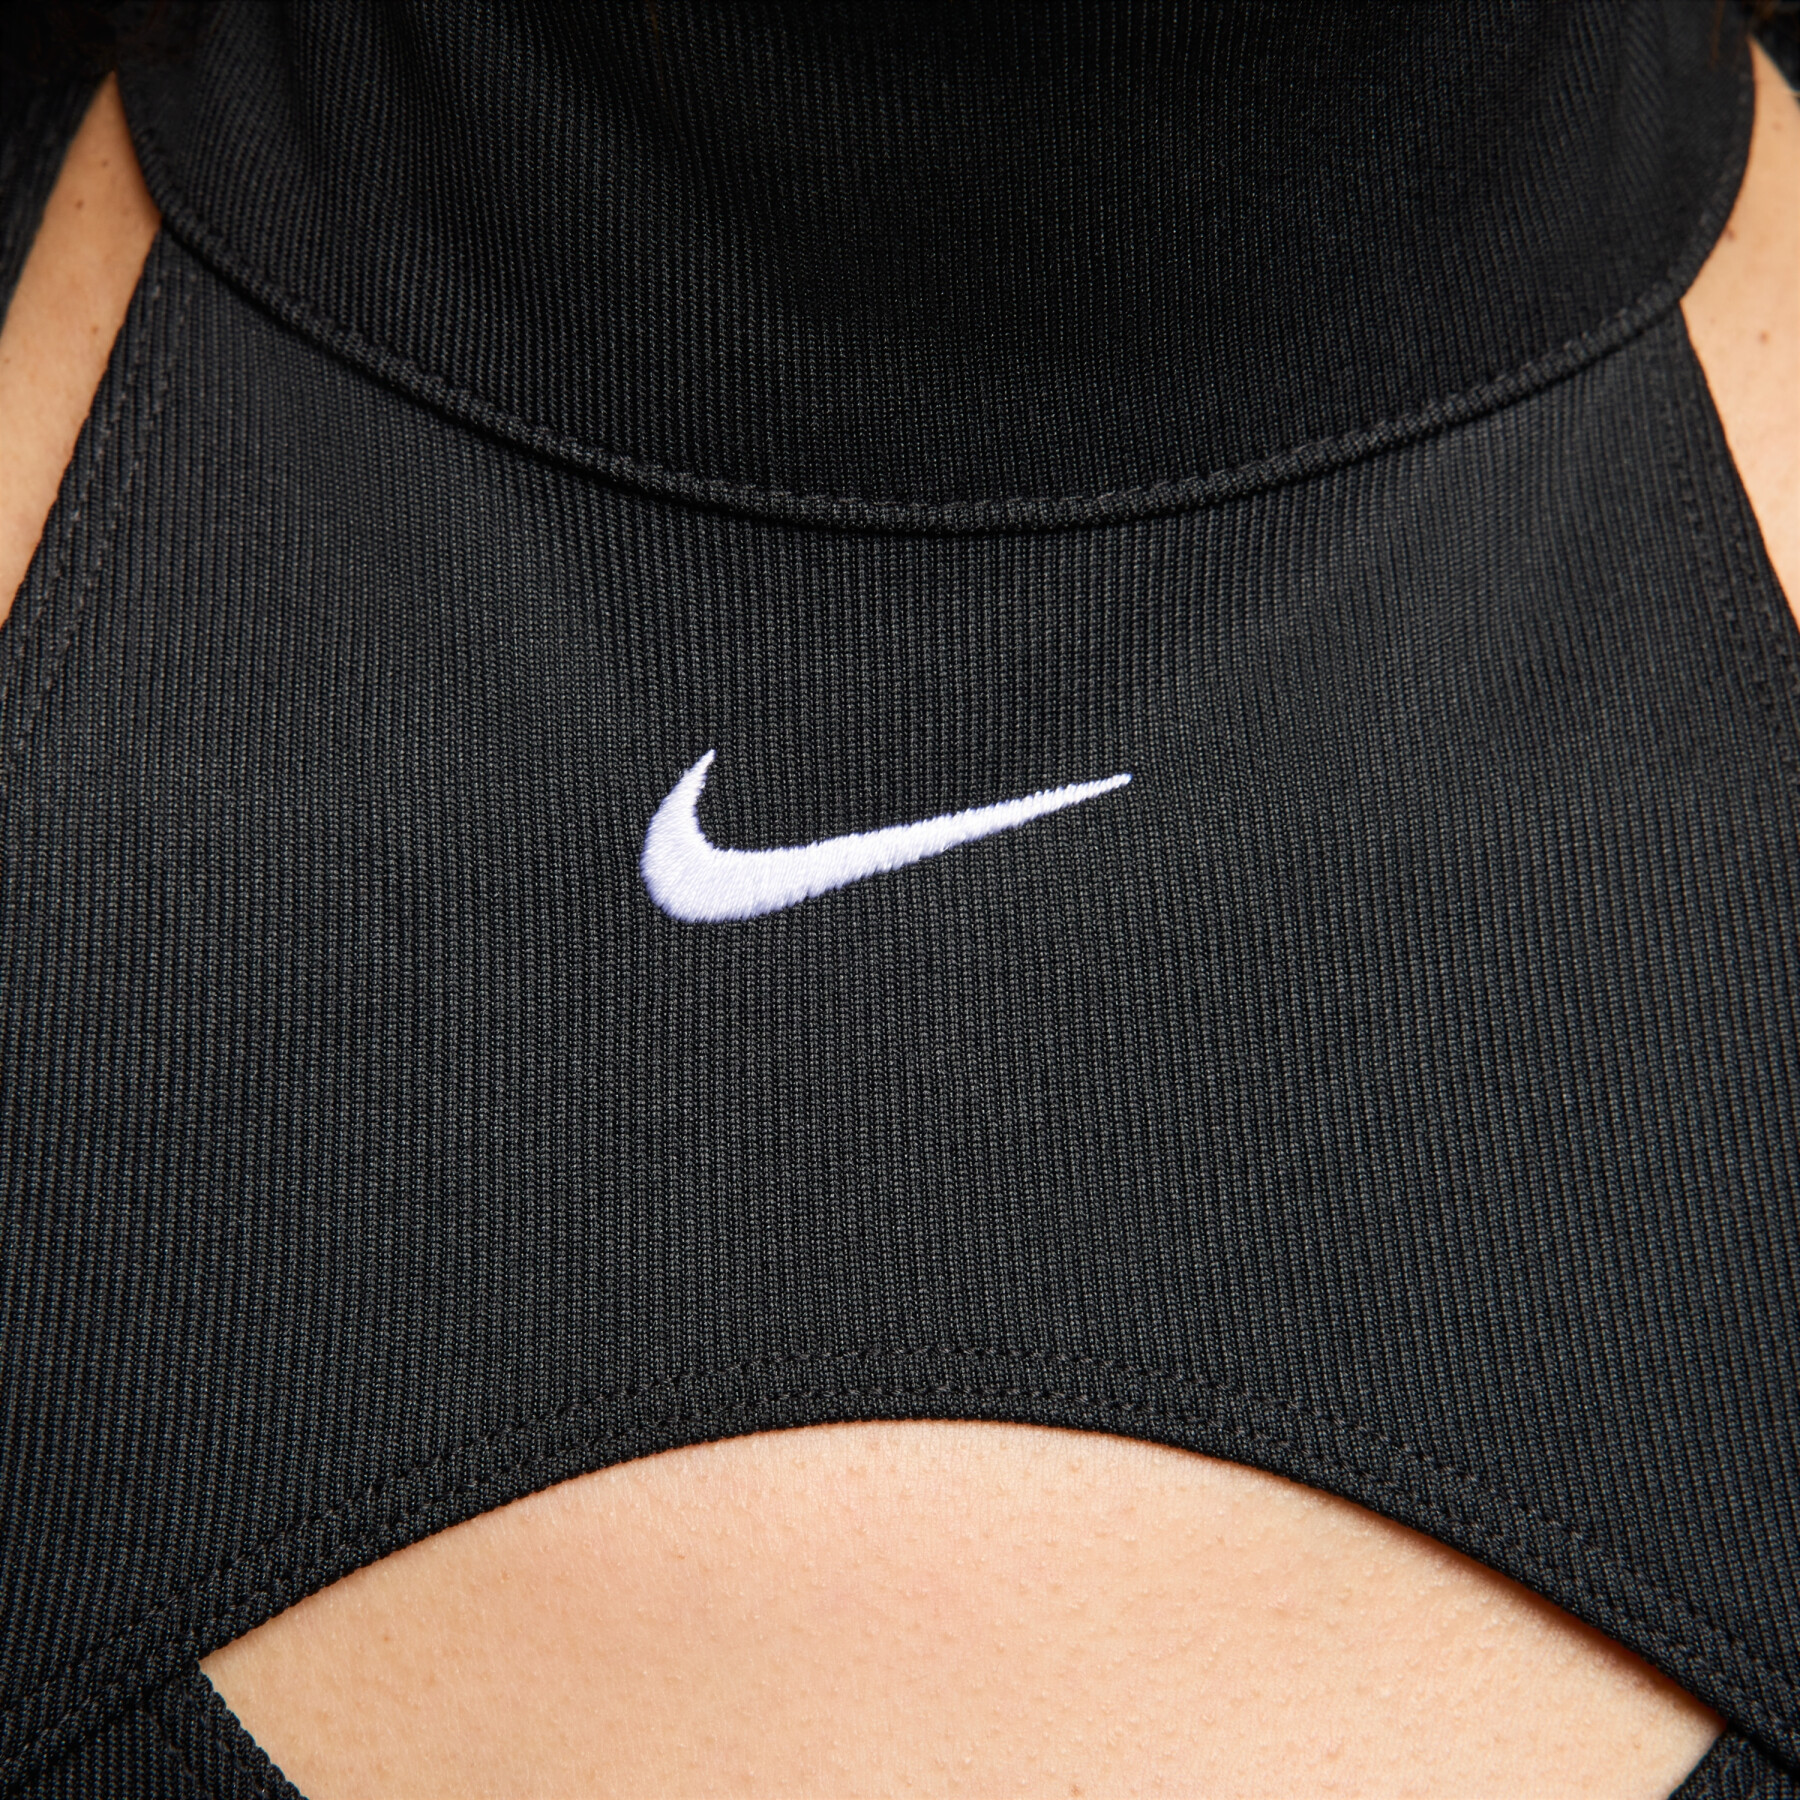 Camiseta de tirantes para mujer Nike